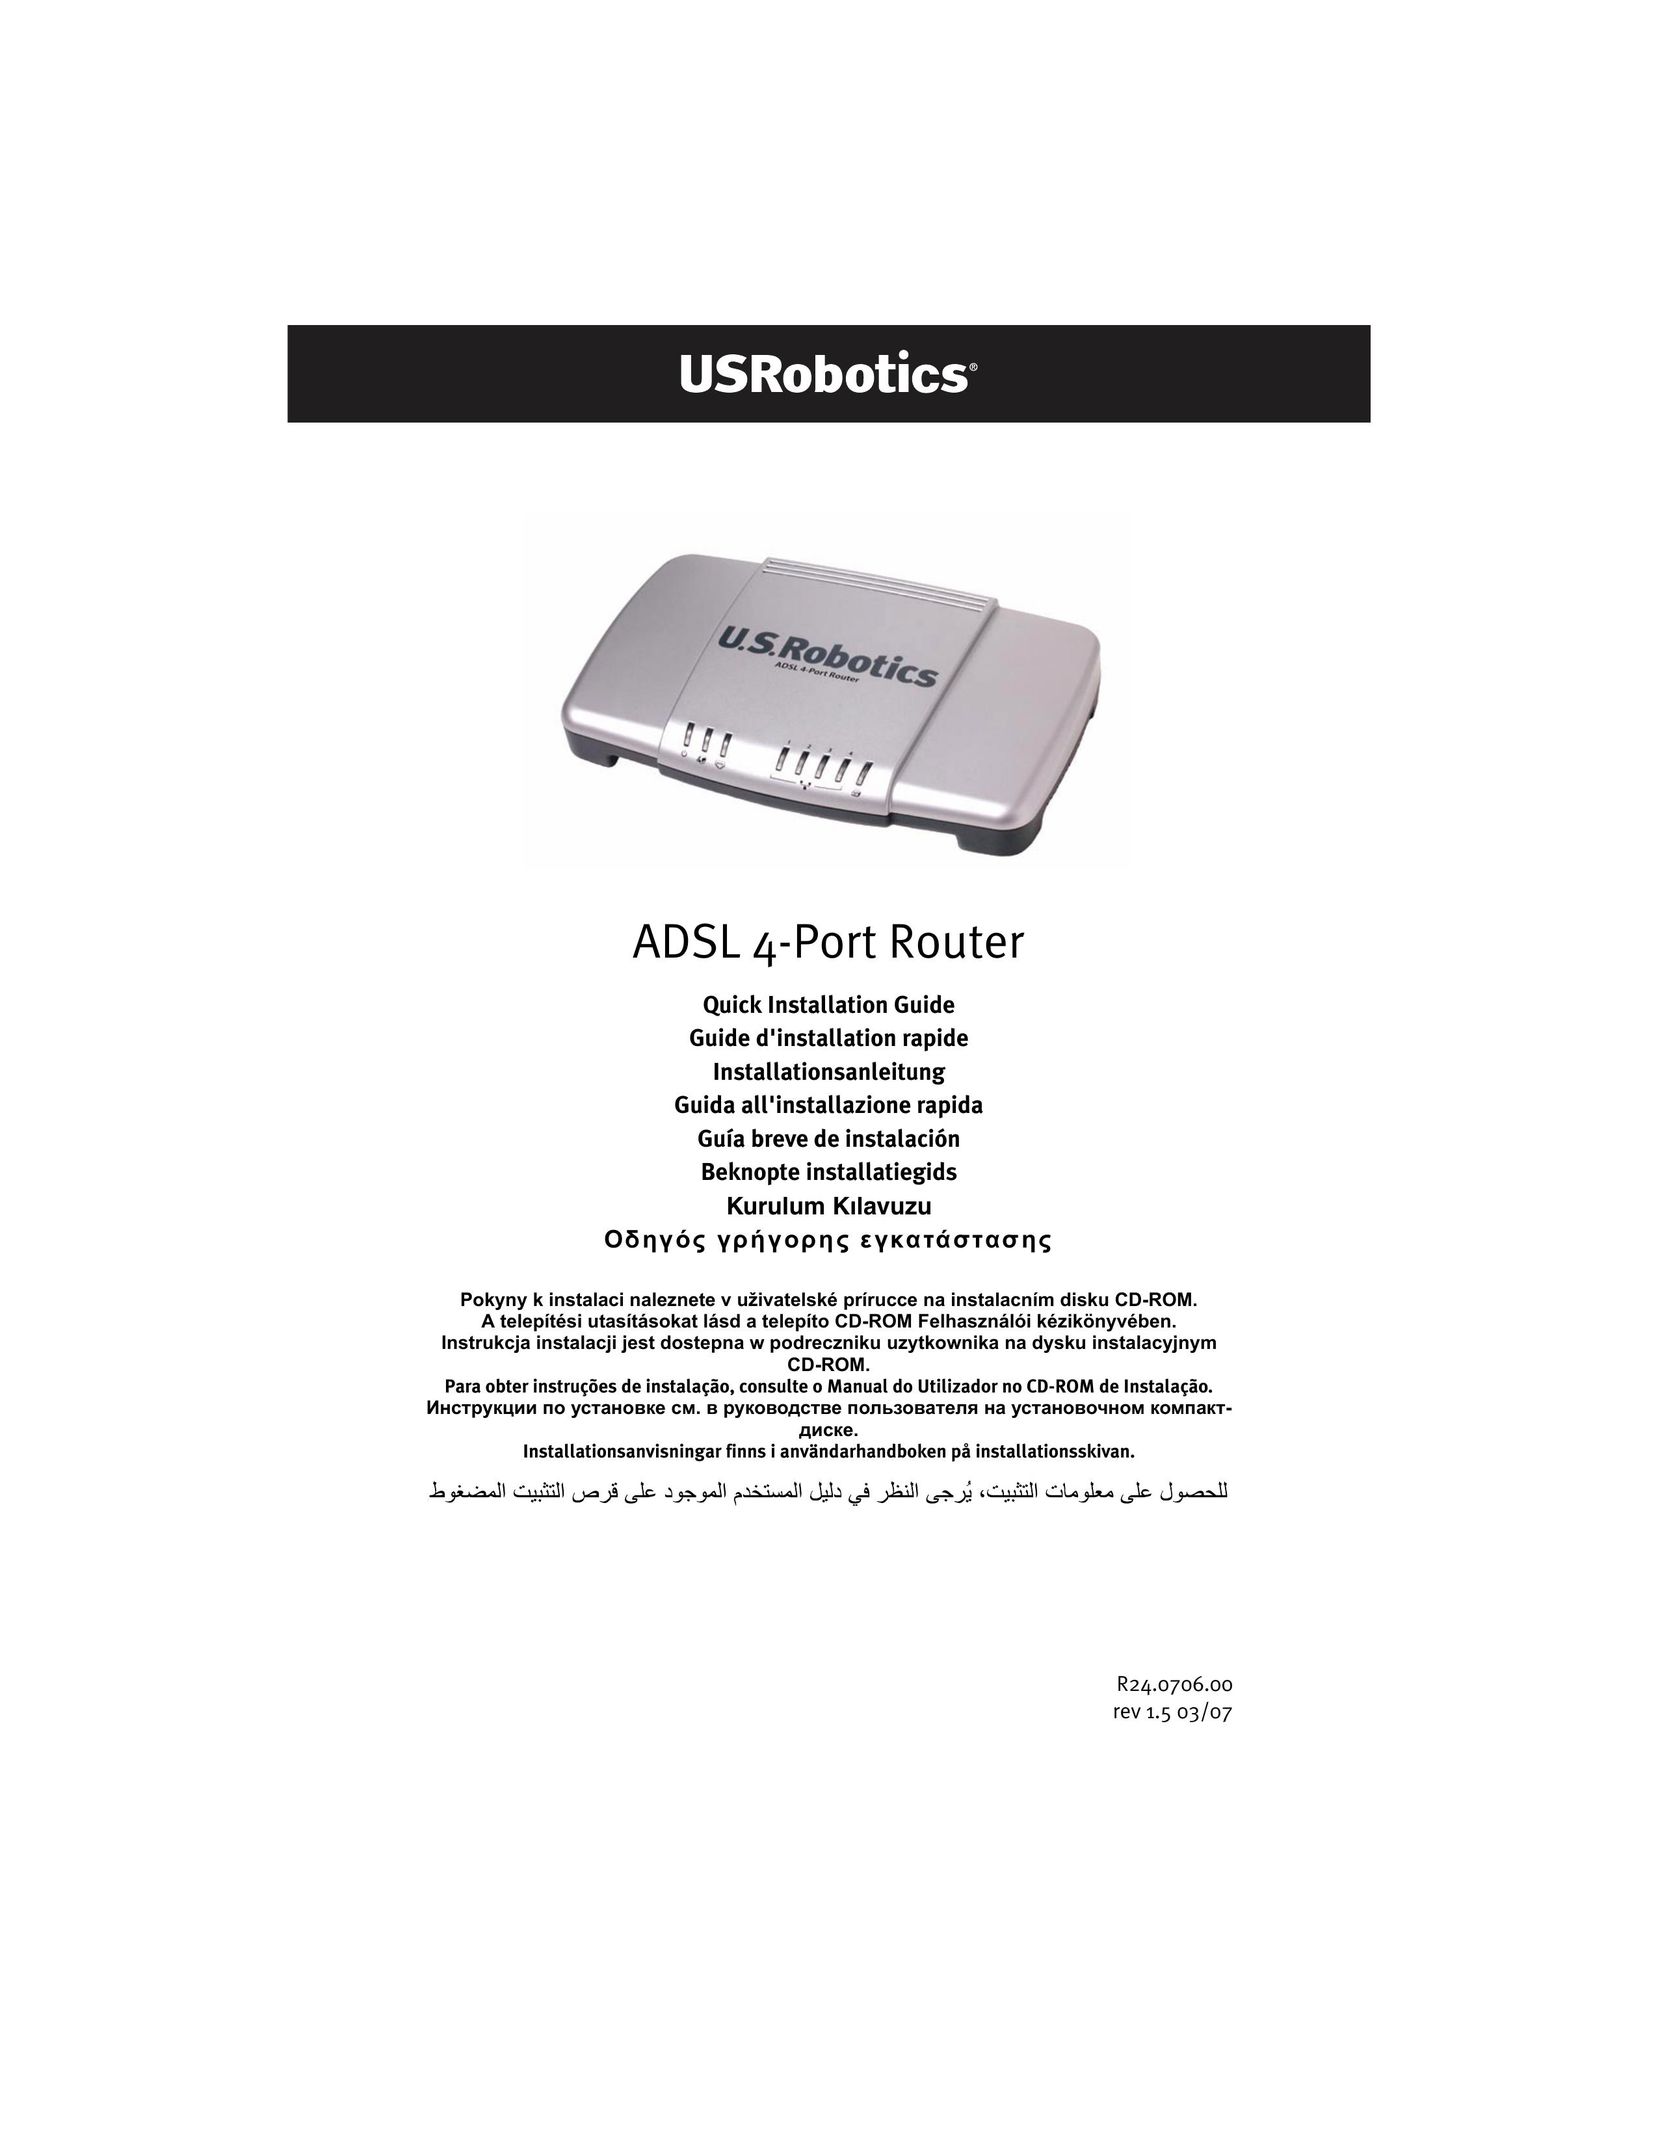 USRobotics ADSL 4-Port Router Network Router User Manual